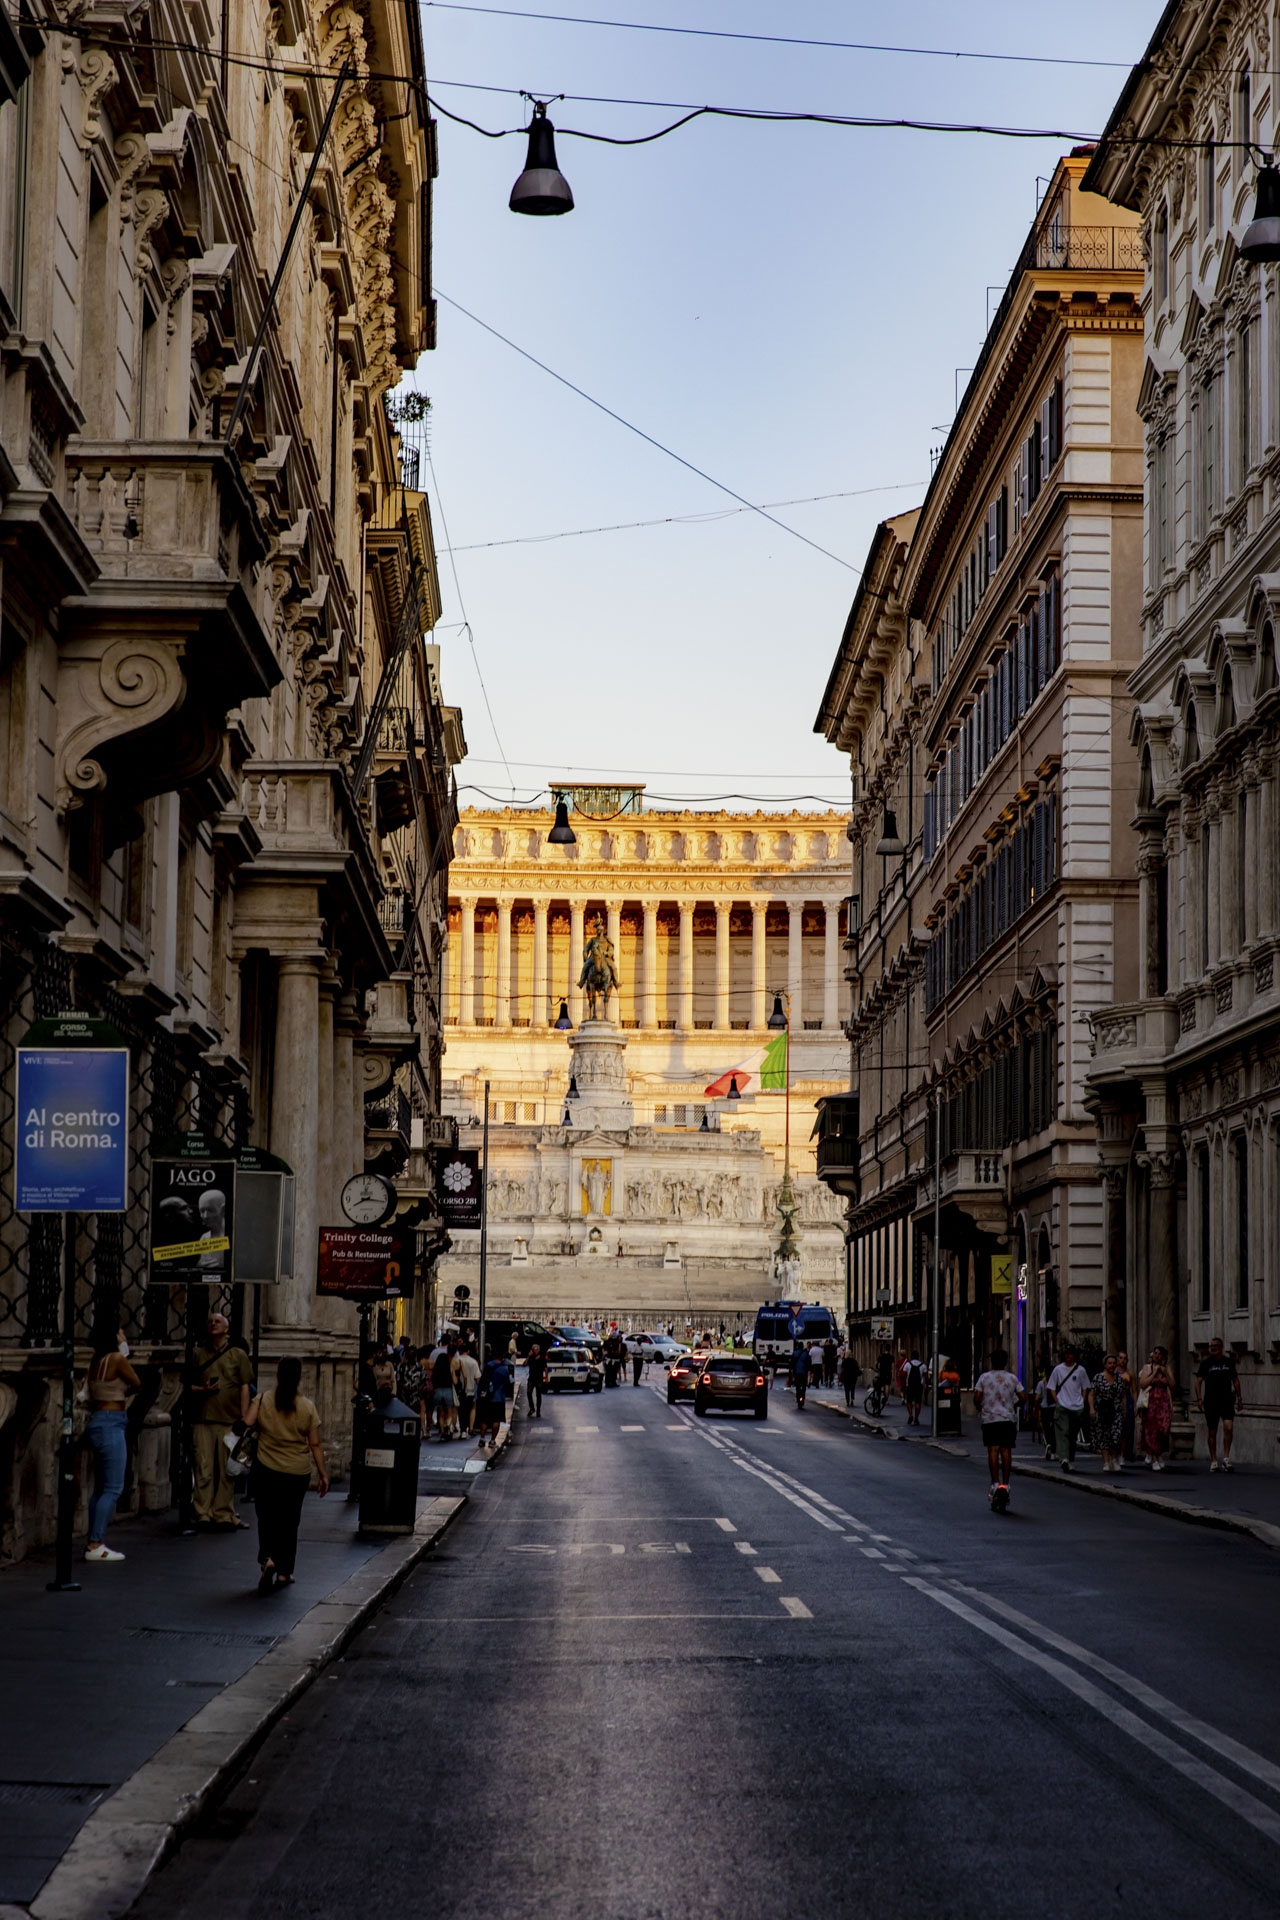 PROLED meets ROME